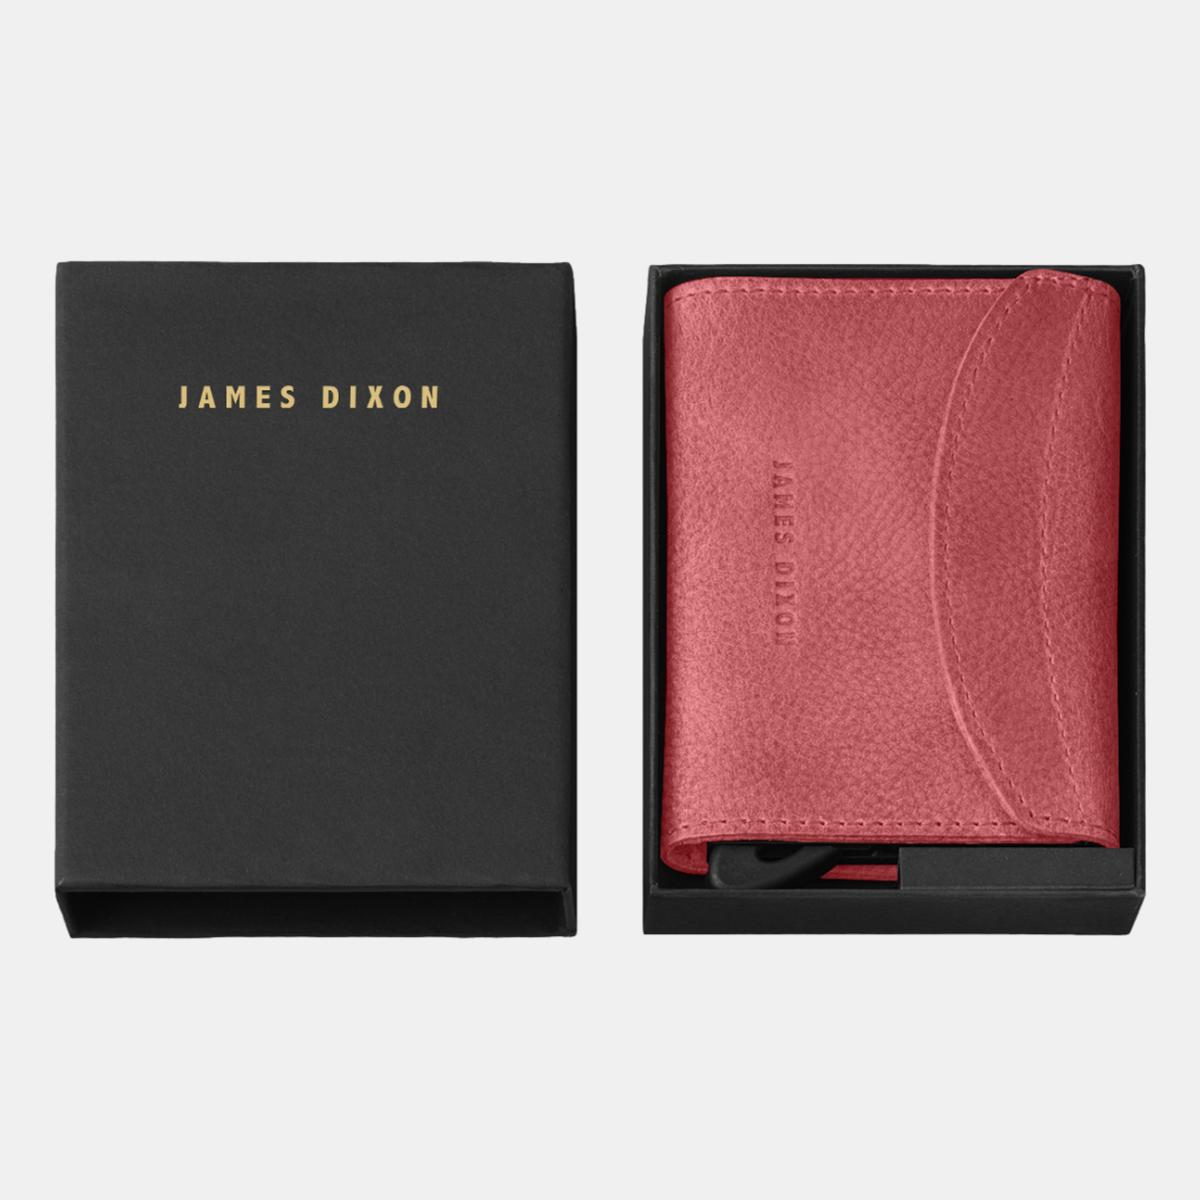 jd0299 james dixon grande grace coral pink coin pocket wallet box